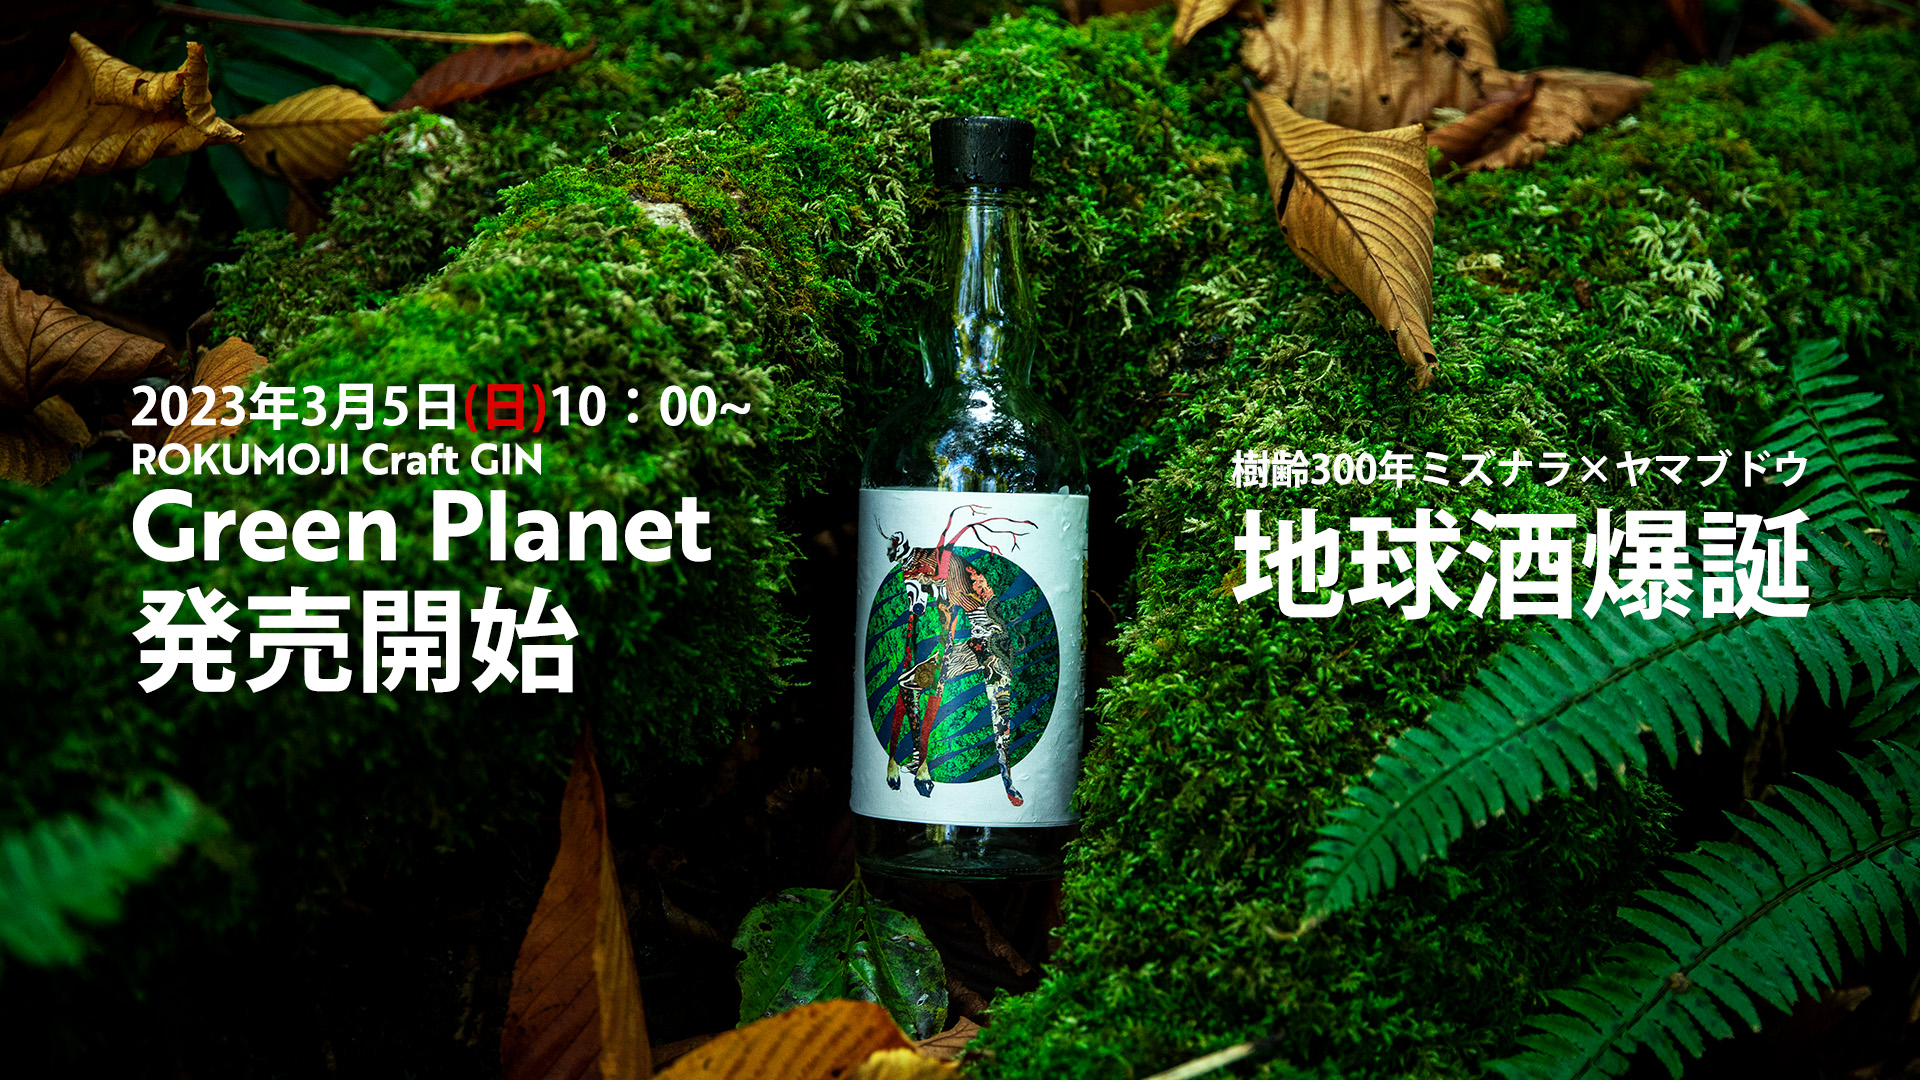 green-planet